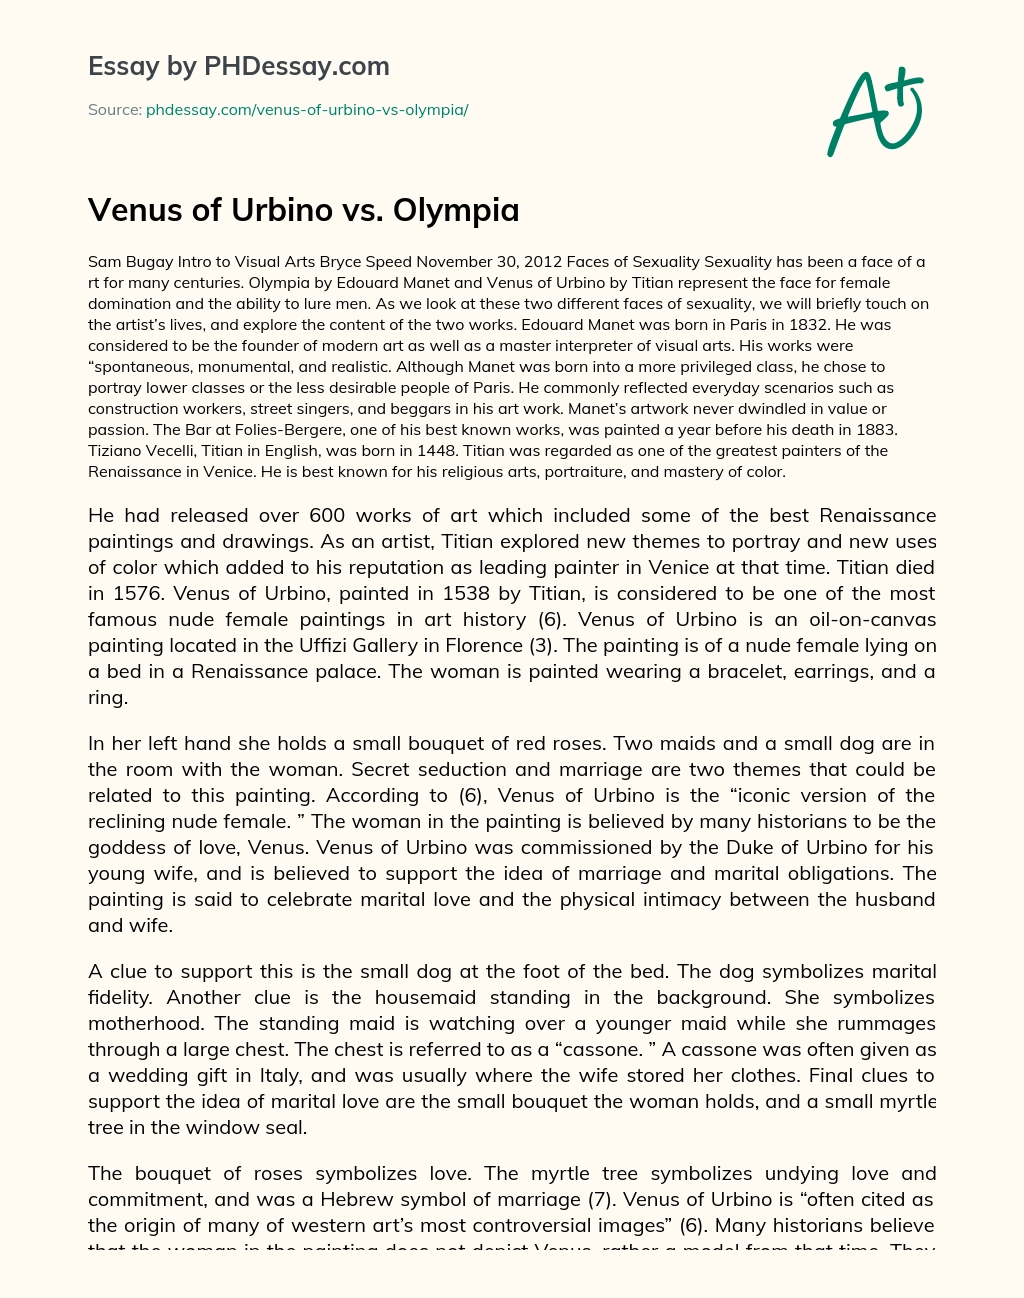 Venus of Urbino vs. Olympia essay